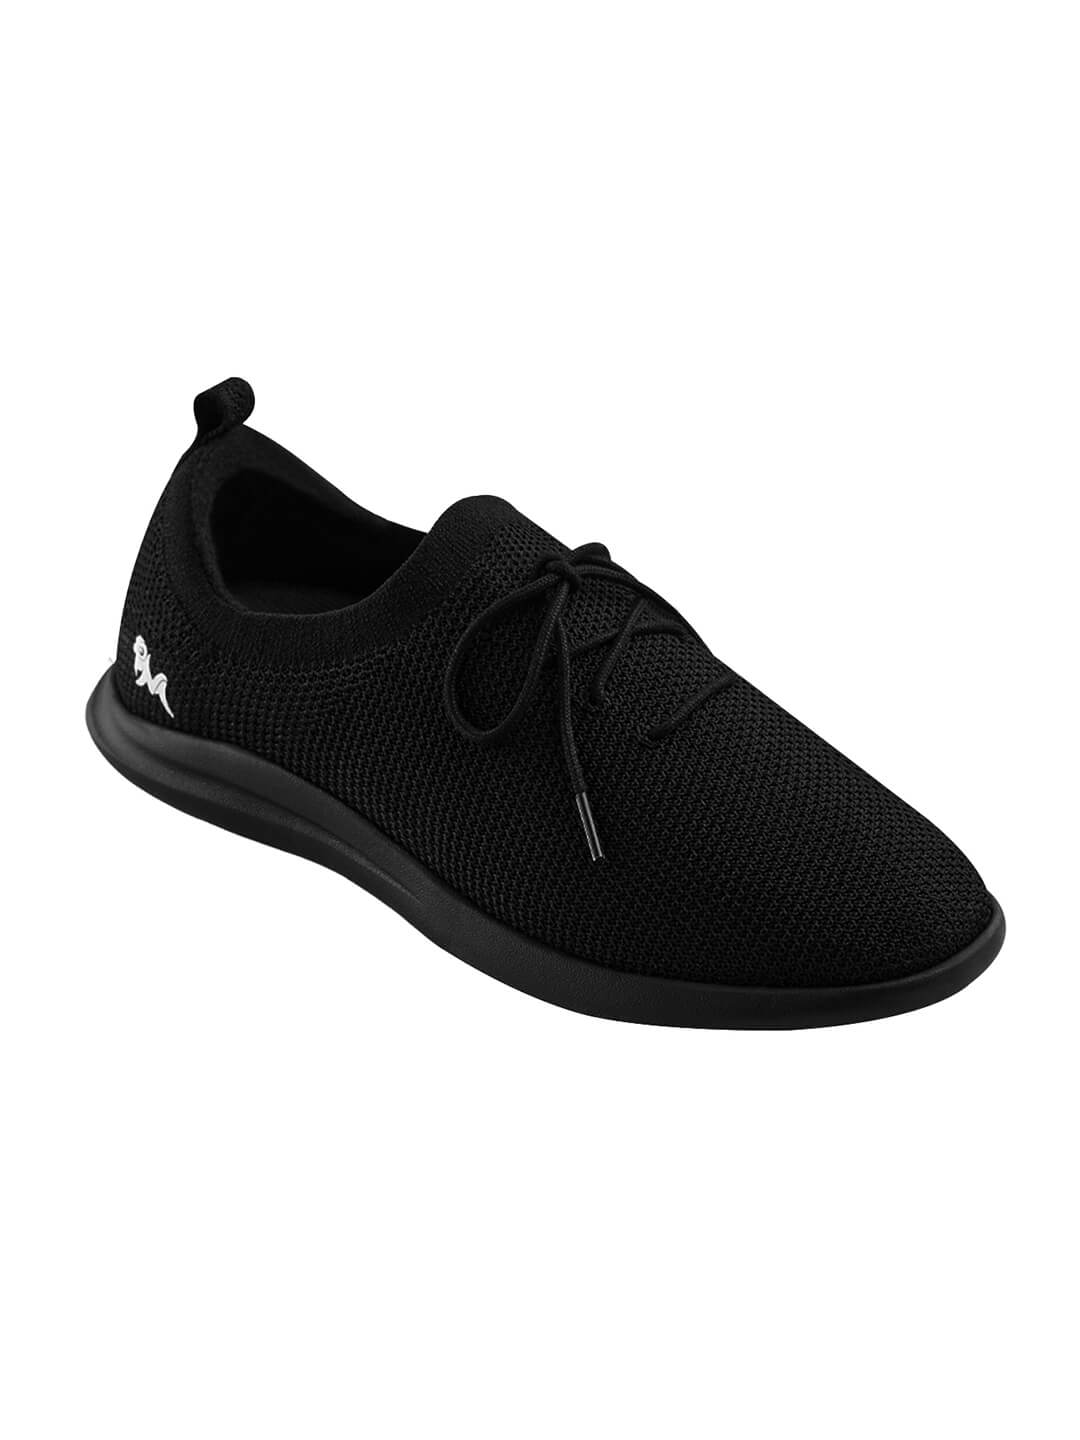 SHOEVESCO old skool vans all black Sneakers For Men - Buy SHOEVESCO old  skool vans all black Sneakers For Men Online at Best Price - Shop Online  for Footwears in India | Flipkart.com